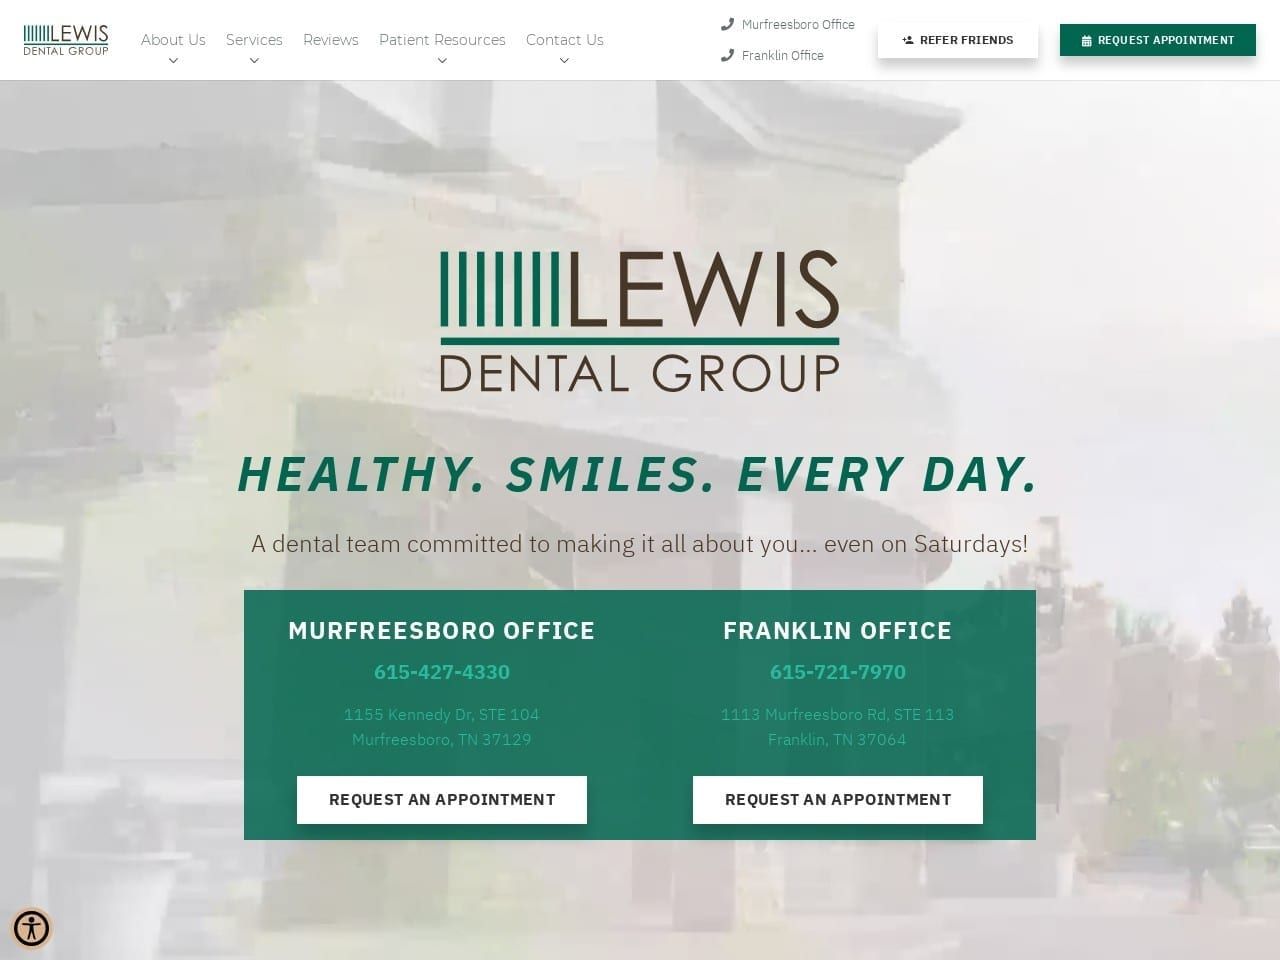 Lewis Dental Group Website Screenshot from lewisdentalgroup.com